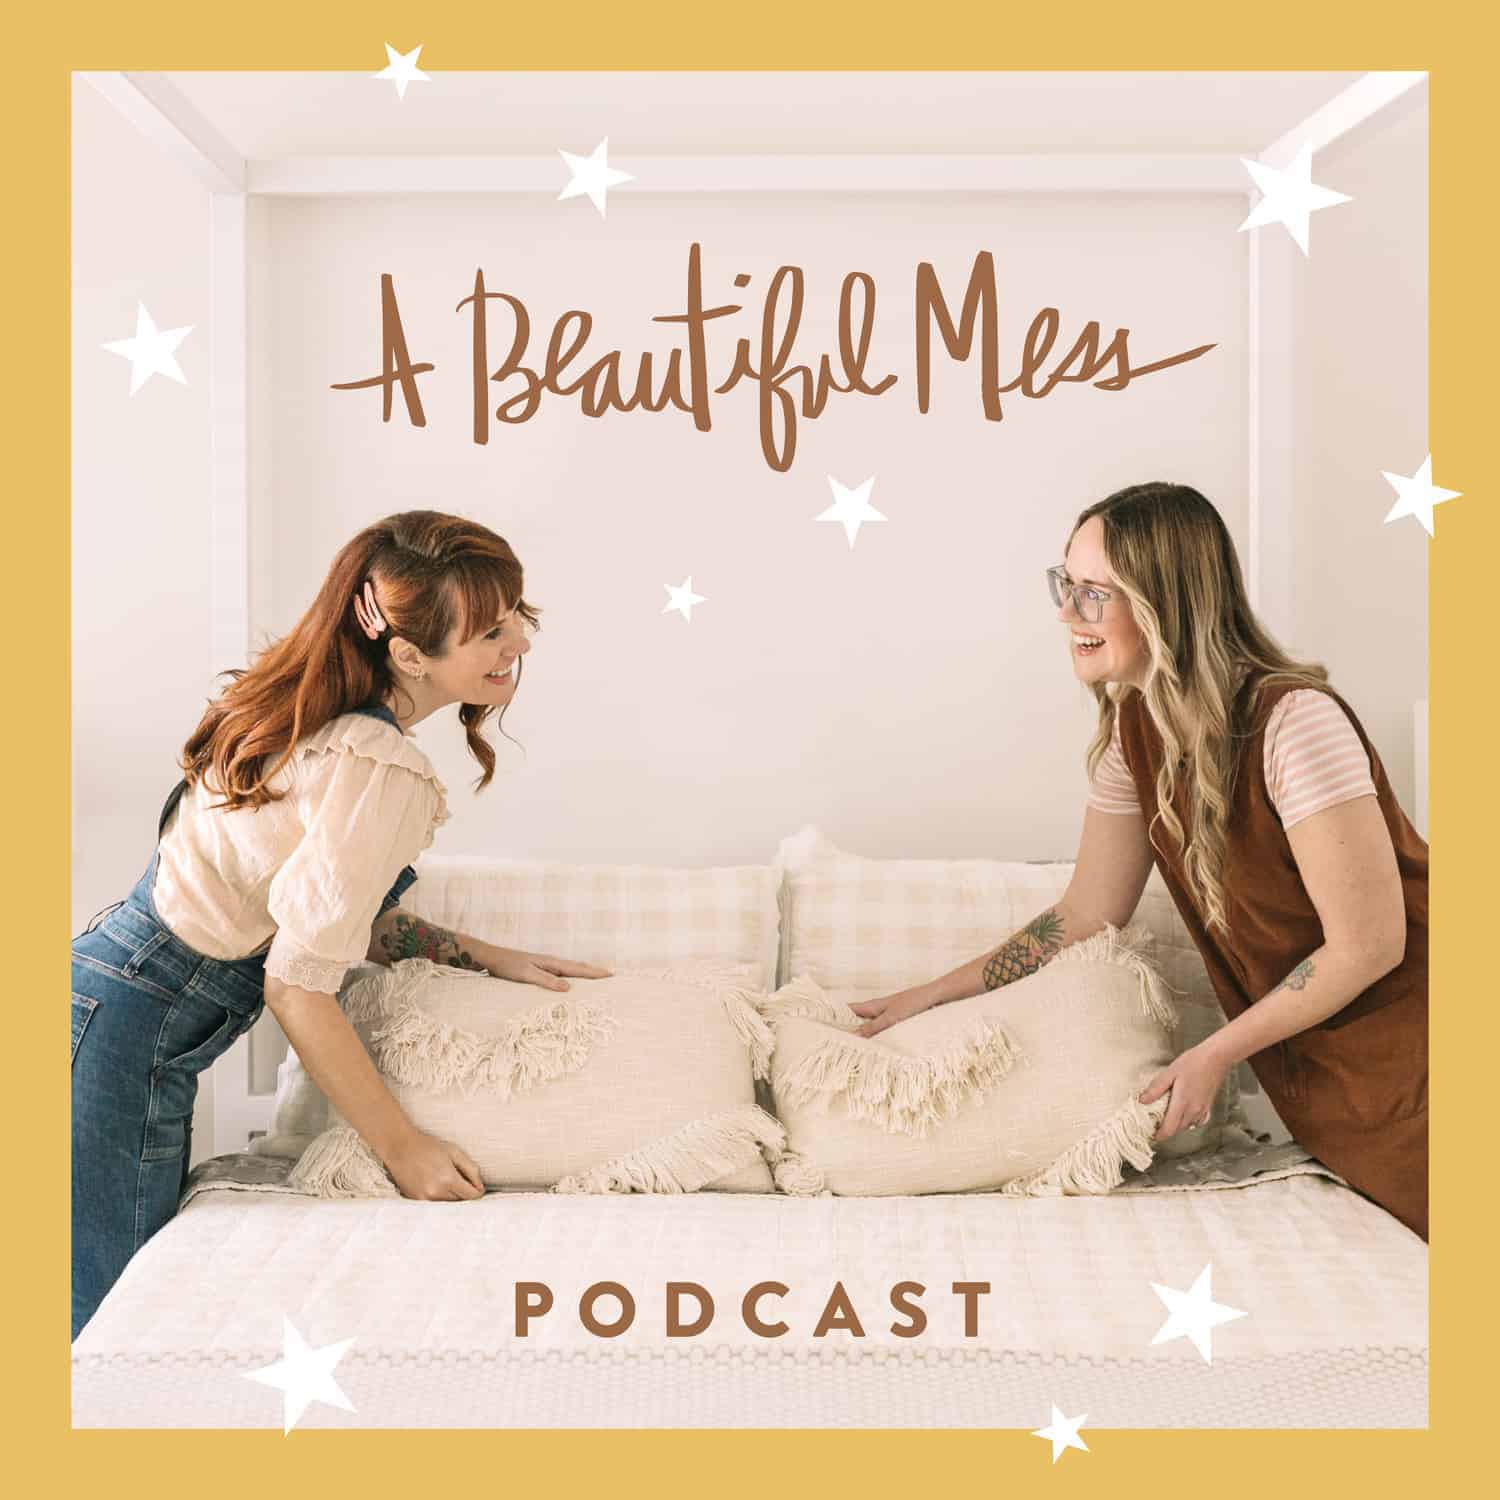 A Beautiful Mess podcast